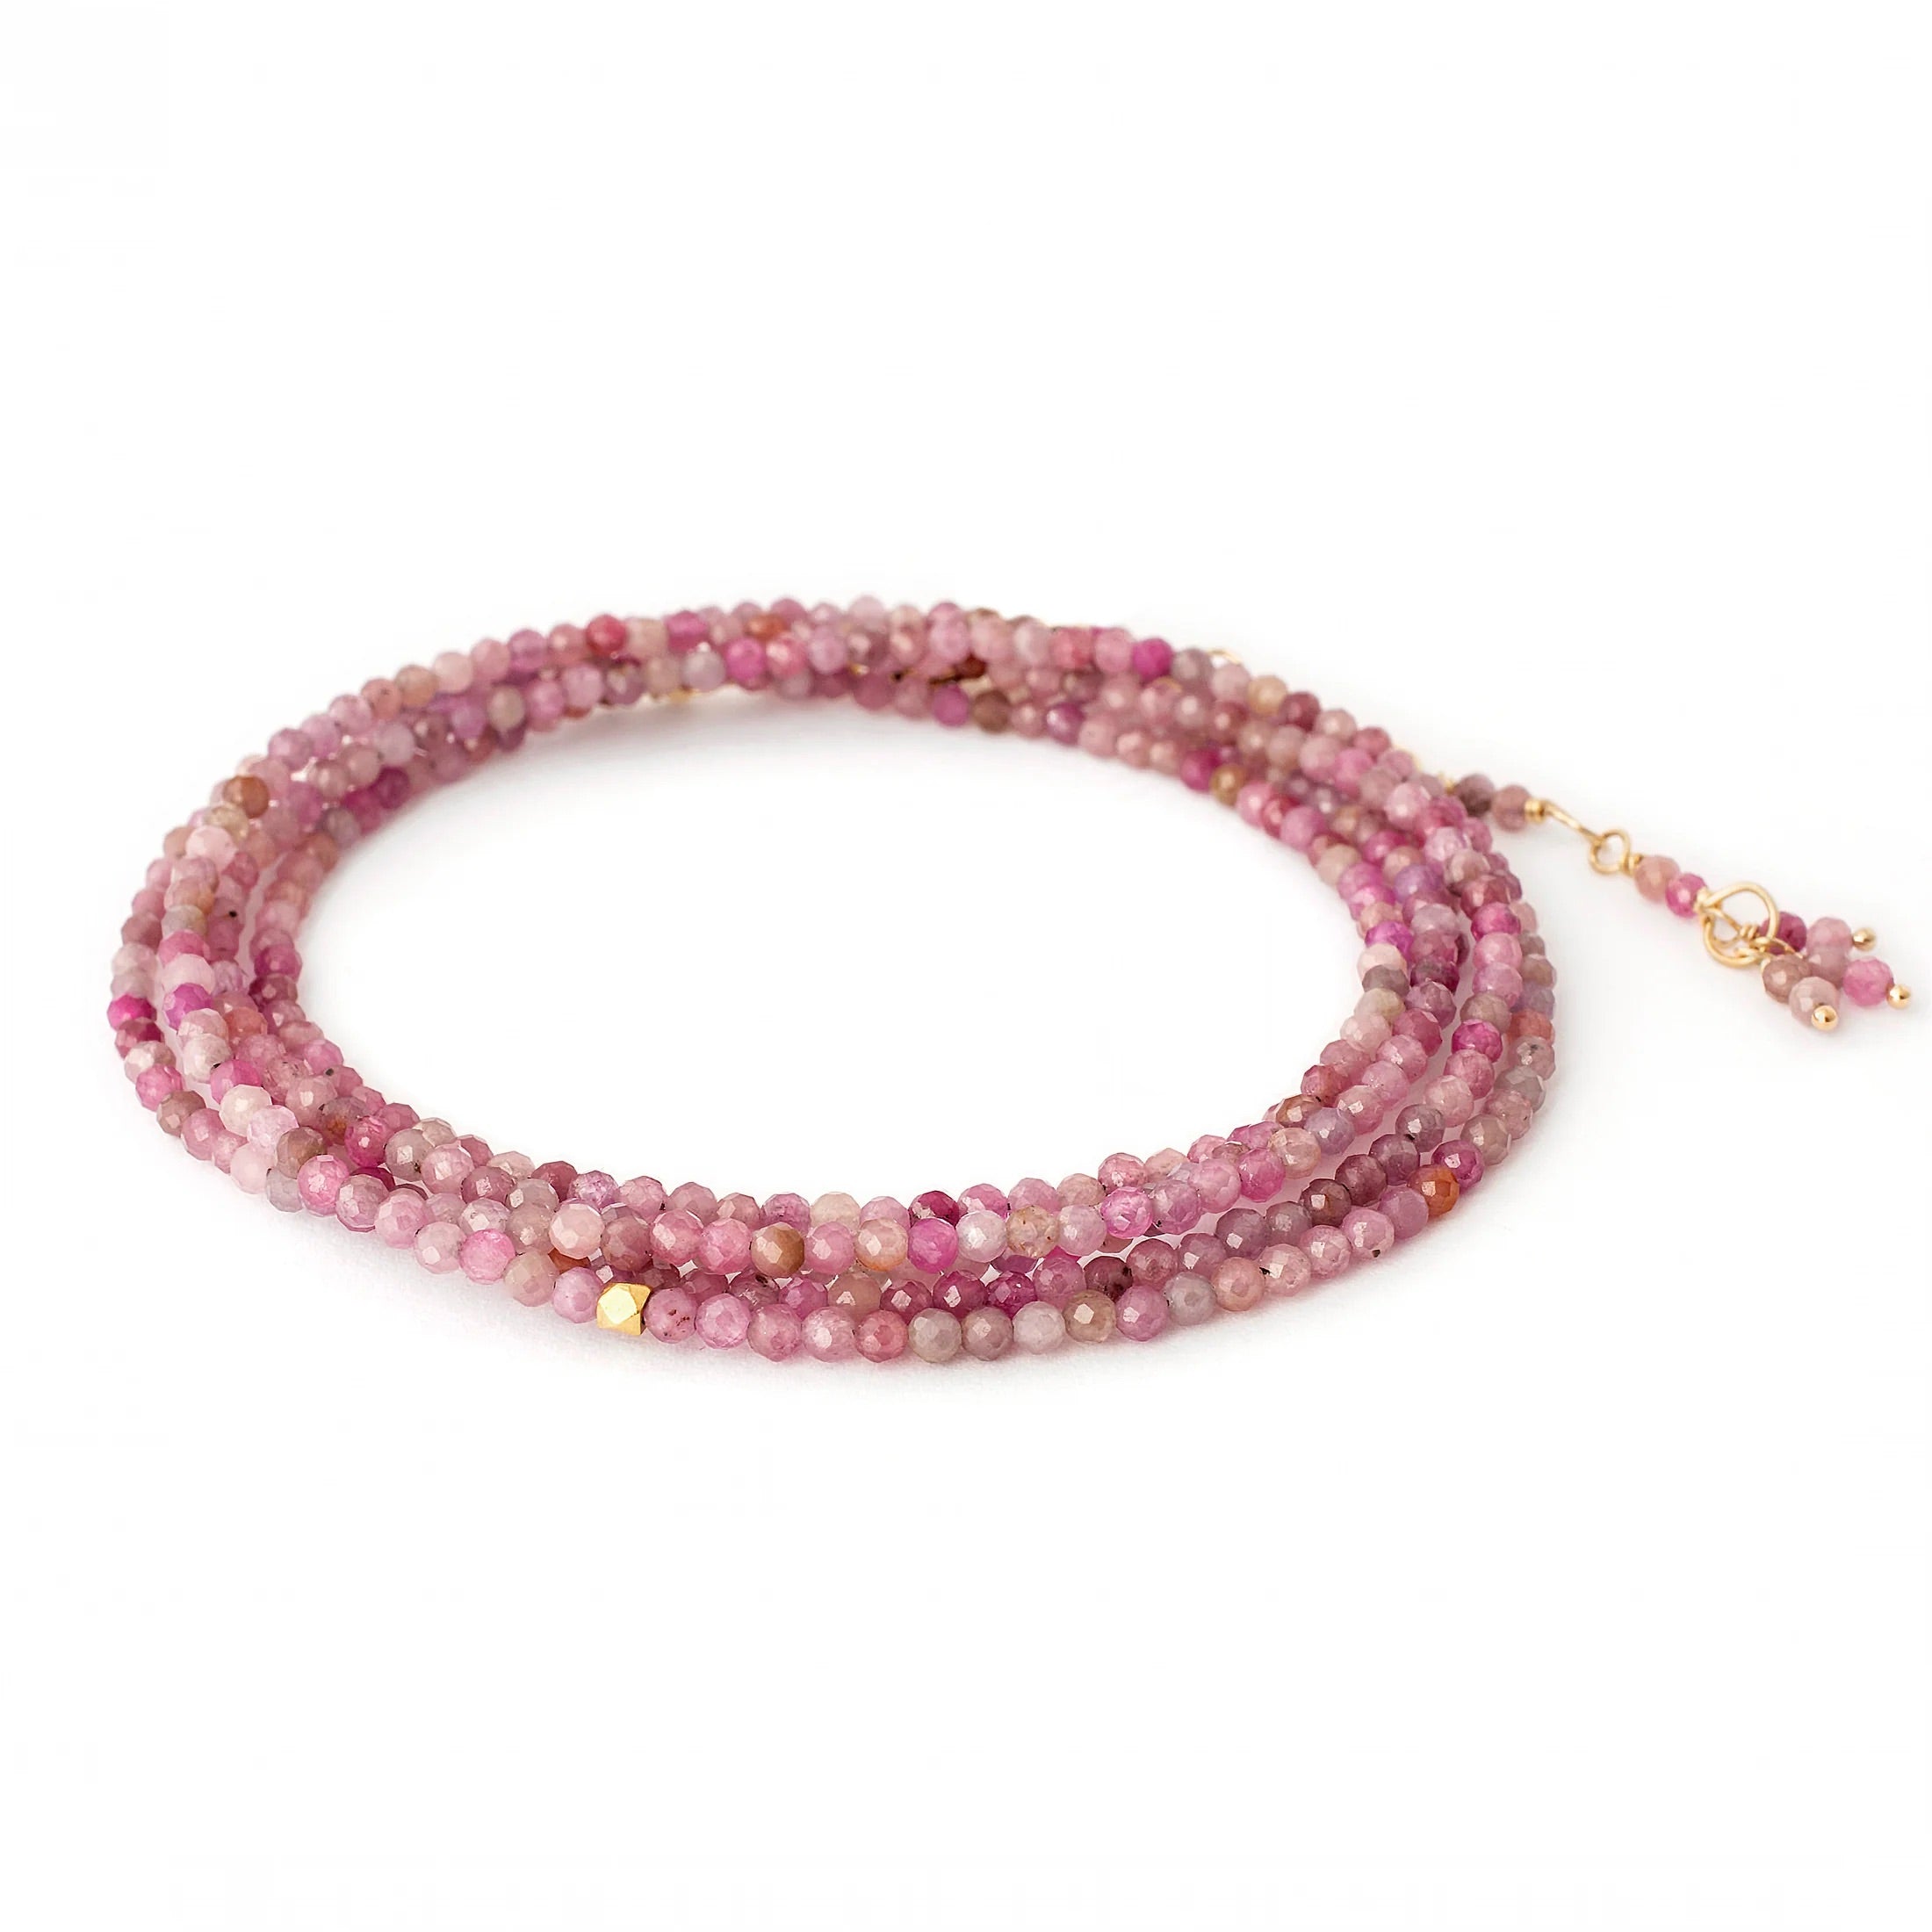 Anne Sportun Multi Pink Ruby Wrap Bracelet - Necklace - Be On Park